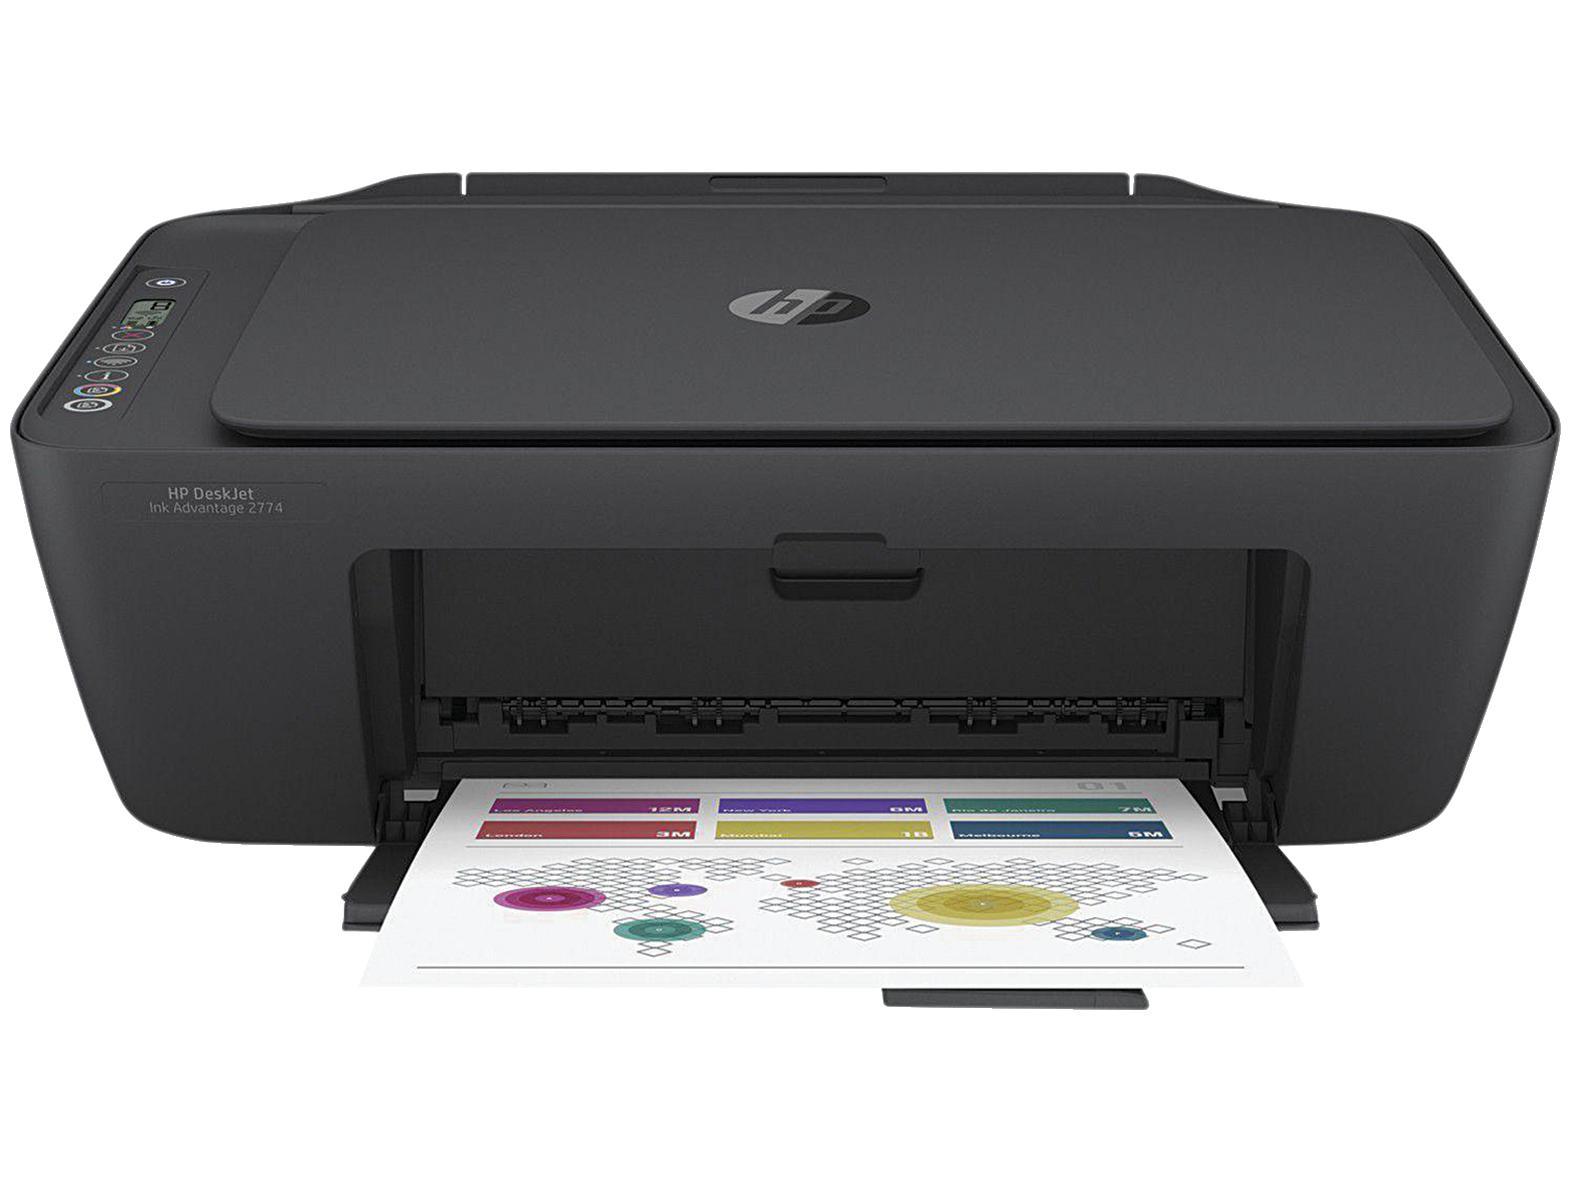 Impressora multifuncional HP DeskJet Ink Advantage 2774 com Wi-Fi